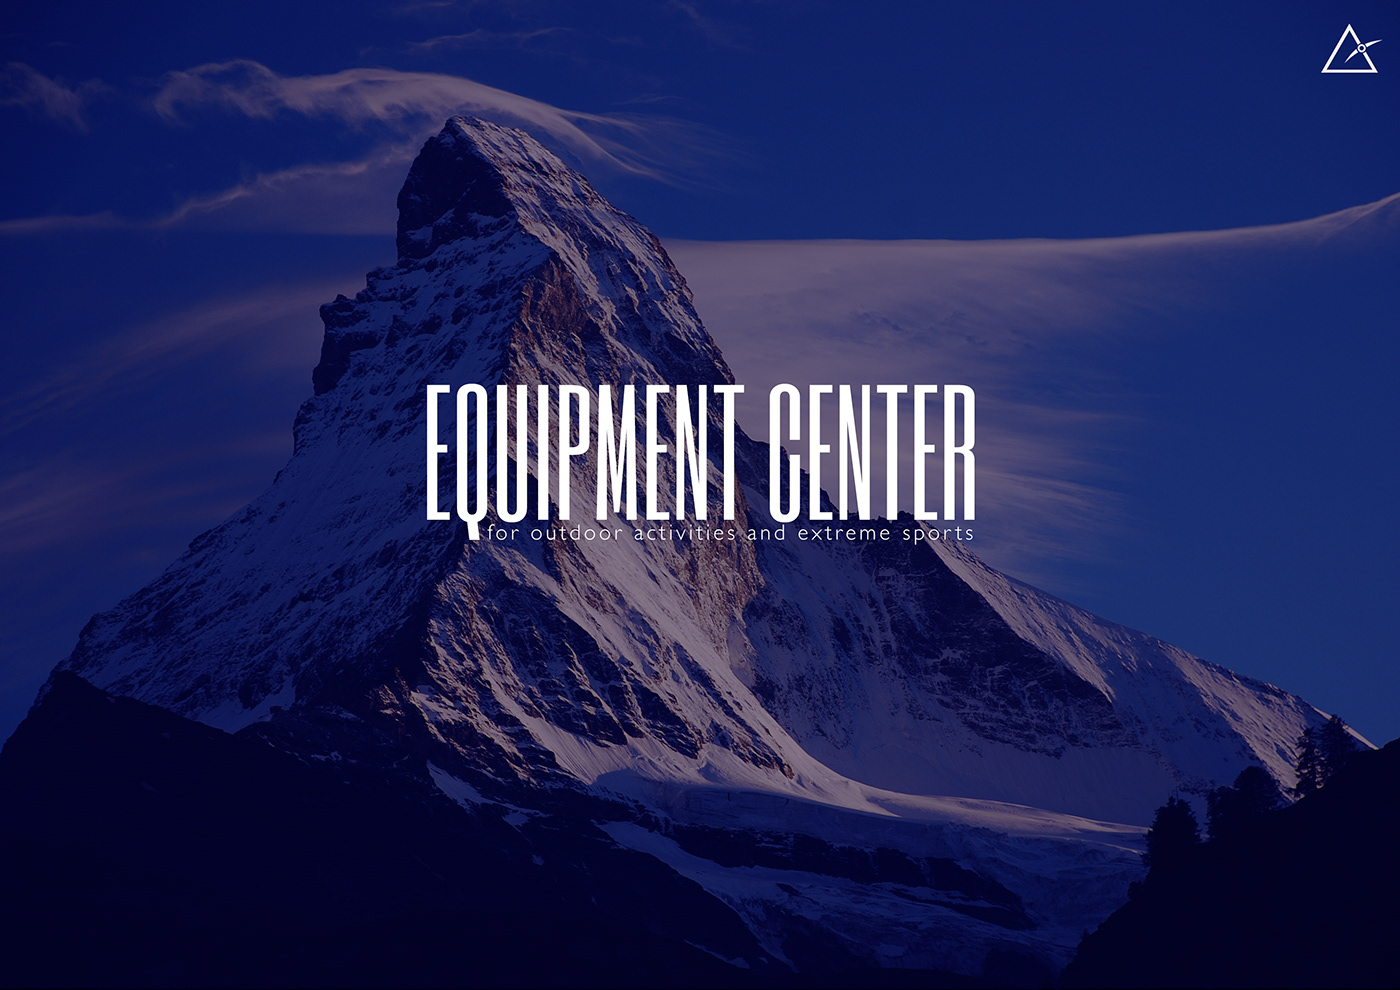 brand equipment mountains mountaineering climbers Corporate Identity rock climbing sport brand book